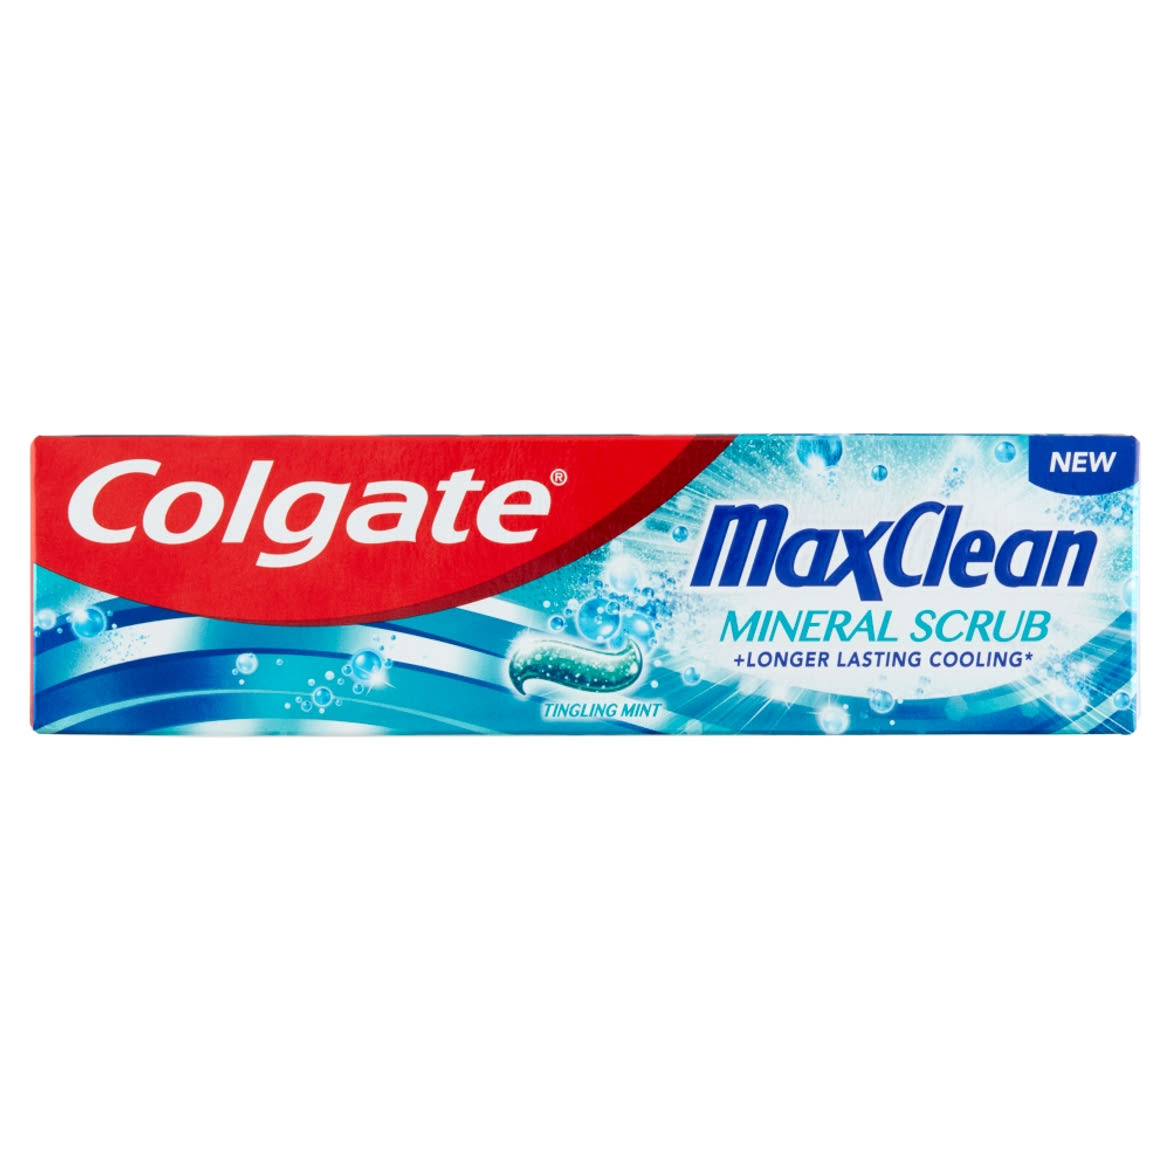 Colgate MaxClean Mineral Scrub fogkrém